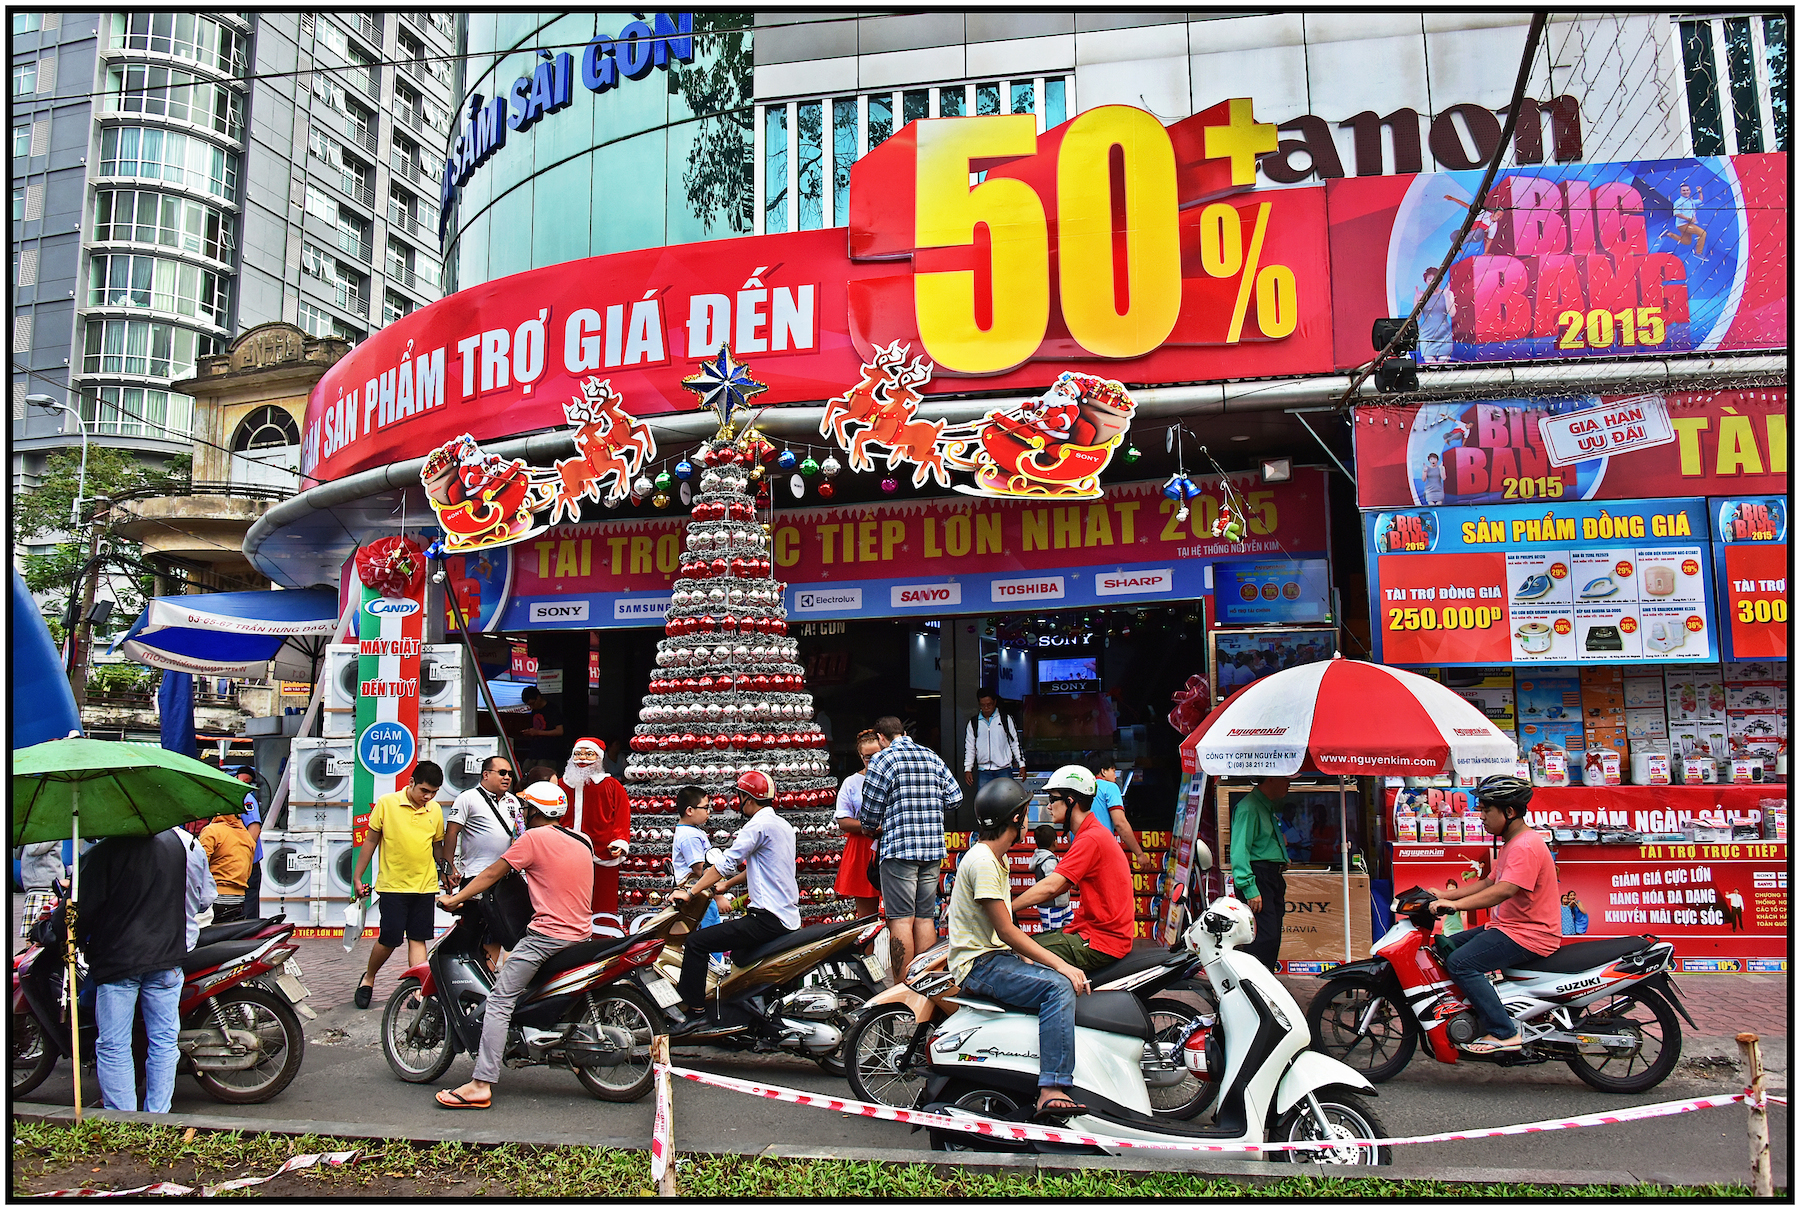  Santa Claus mannequin in front of Saigon/HCMC discount store, Dec. 2015. #6847 